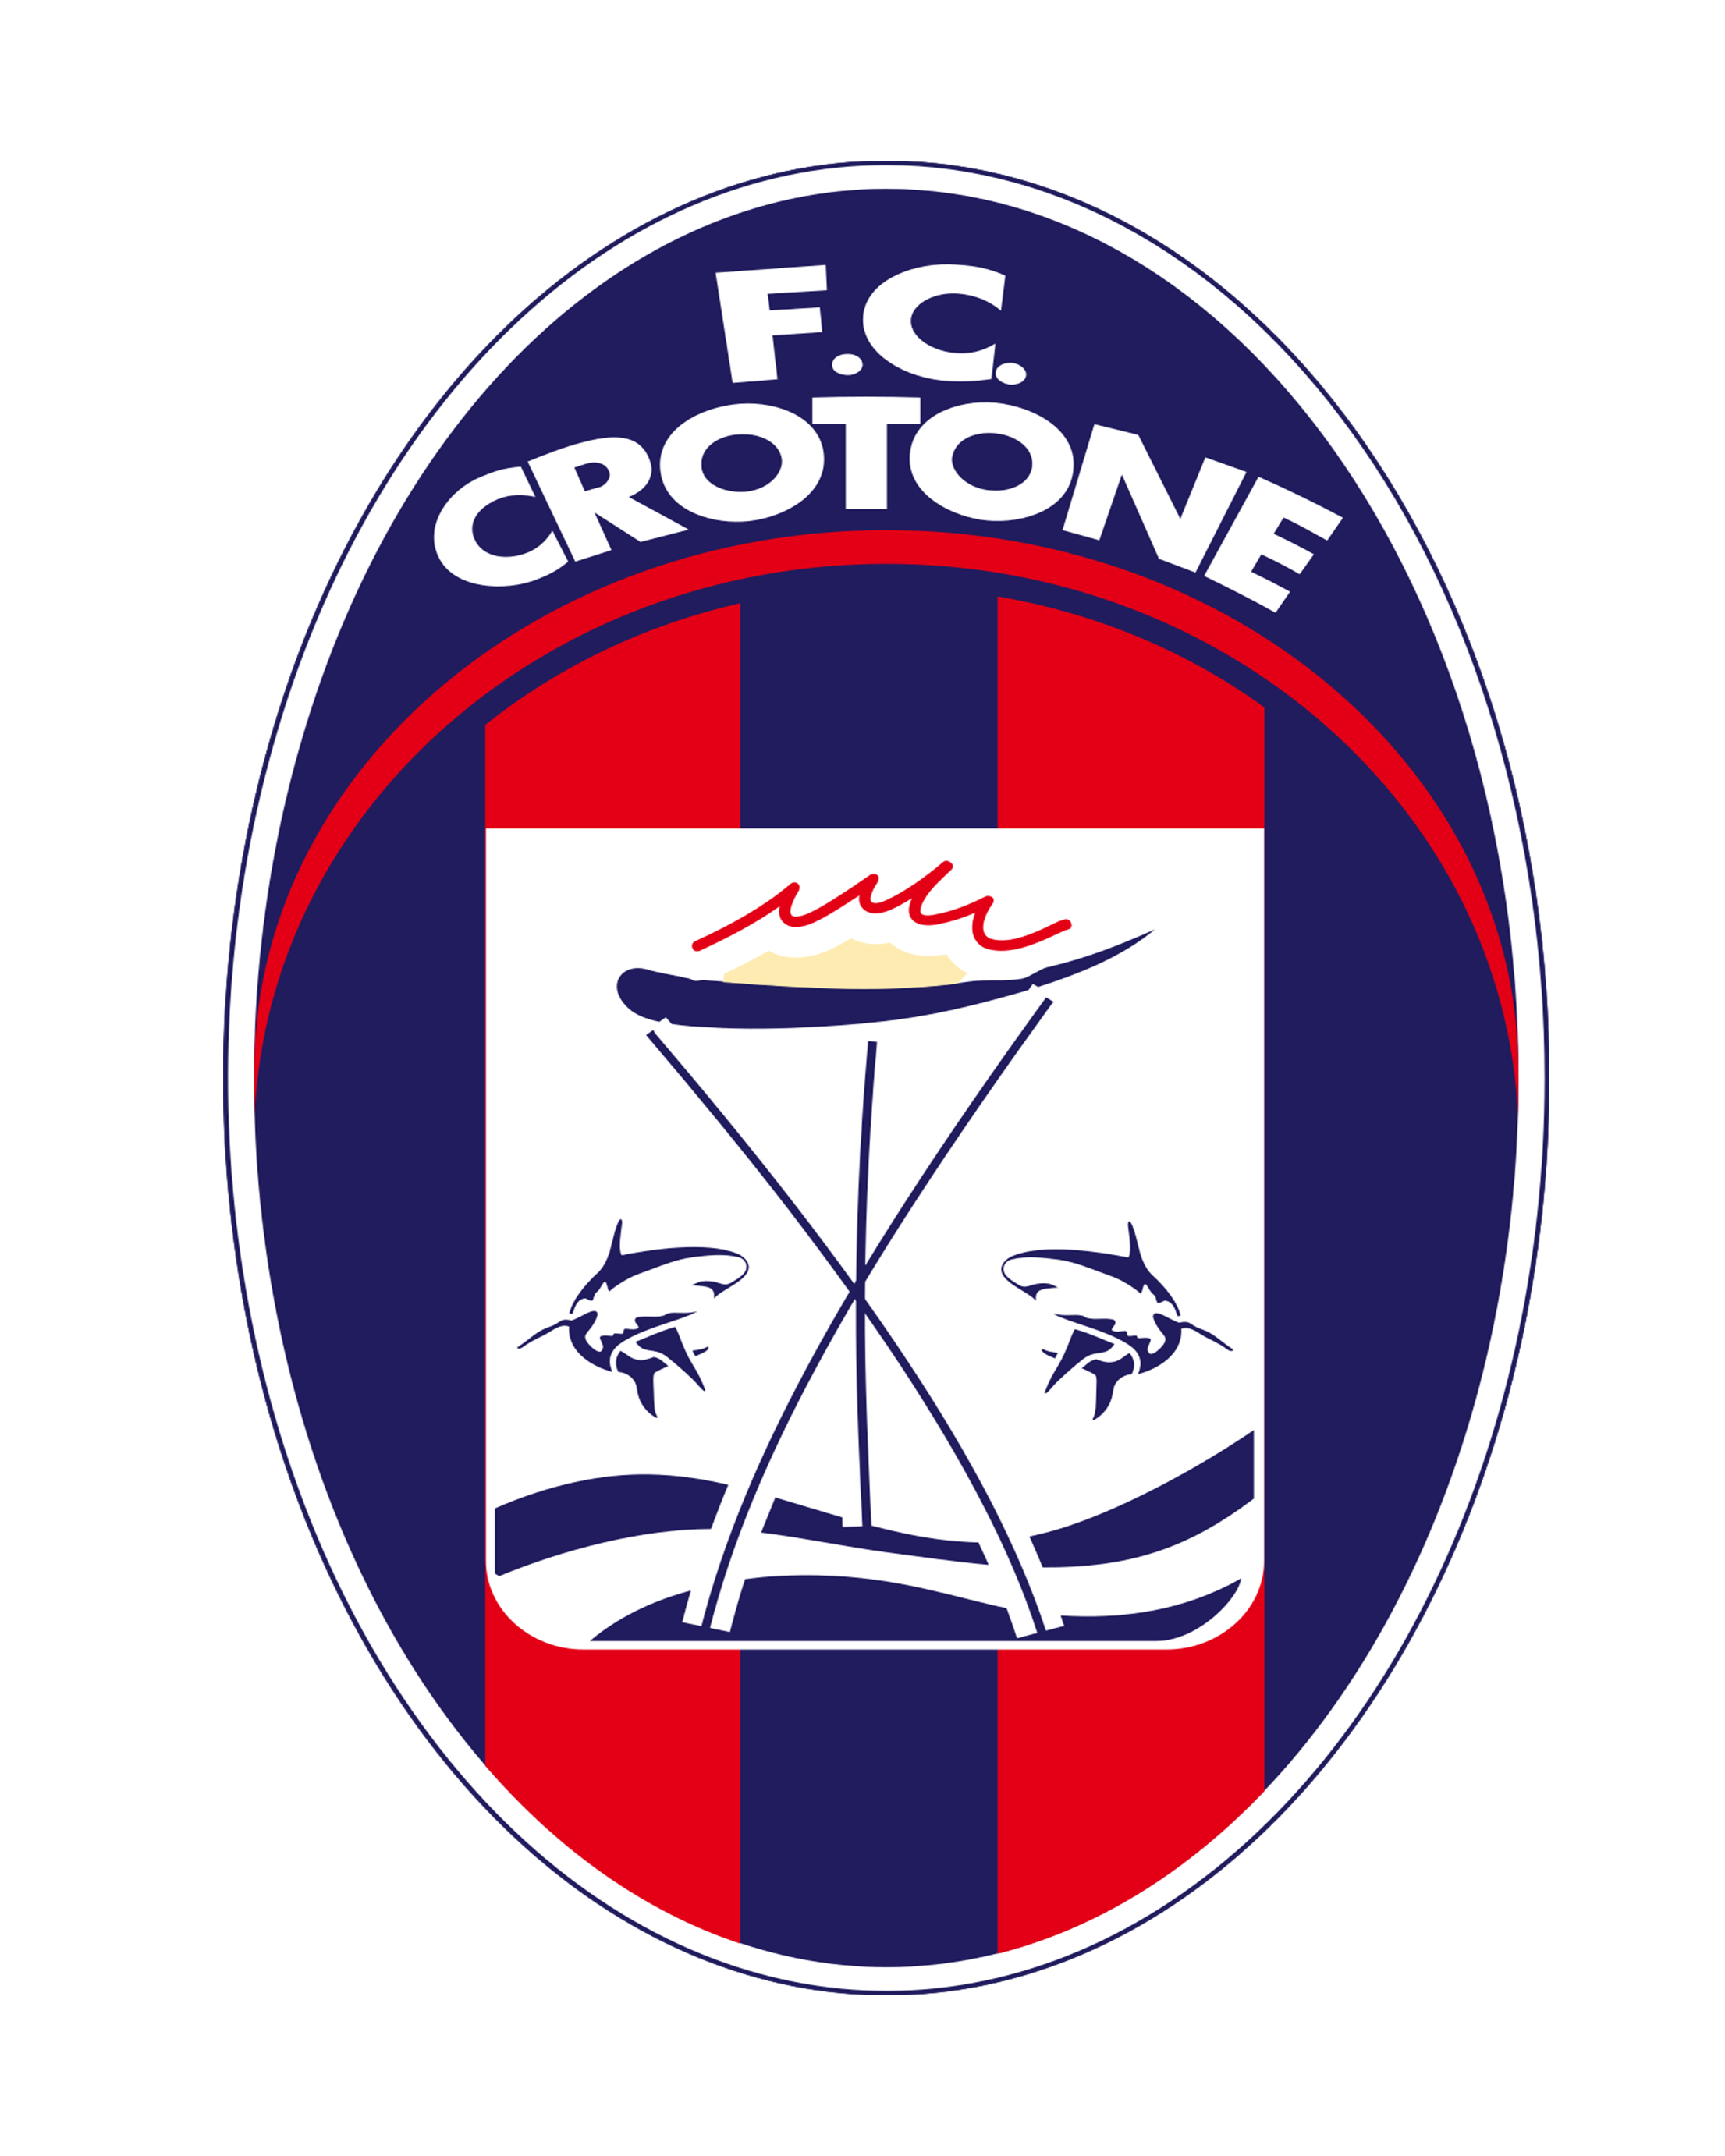 F.C. CROTONE